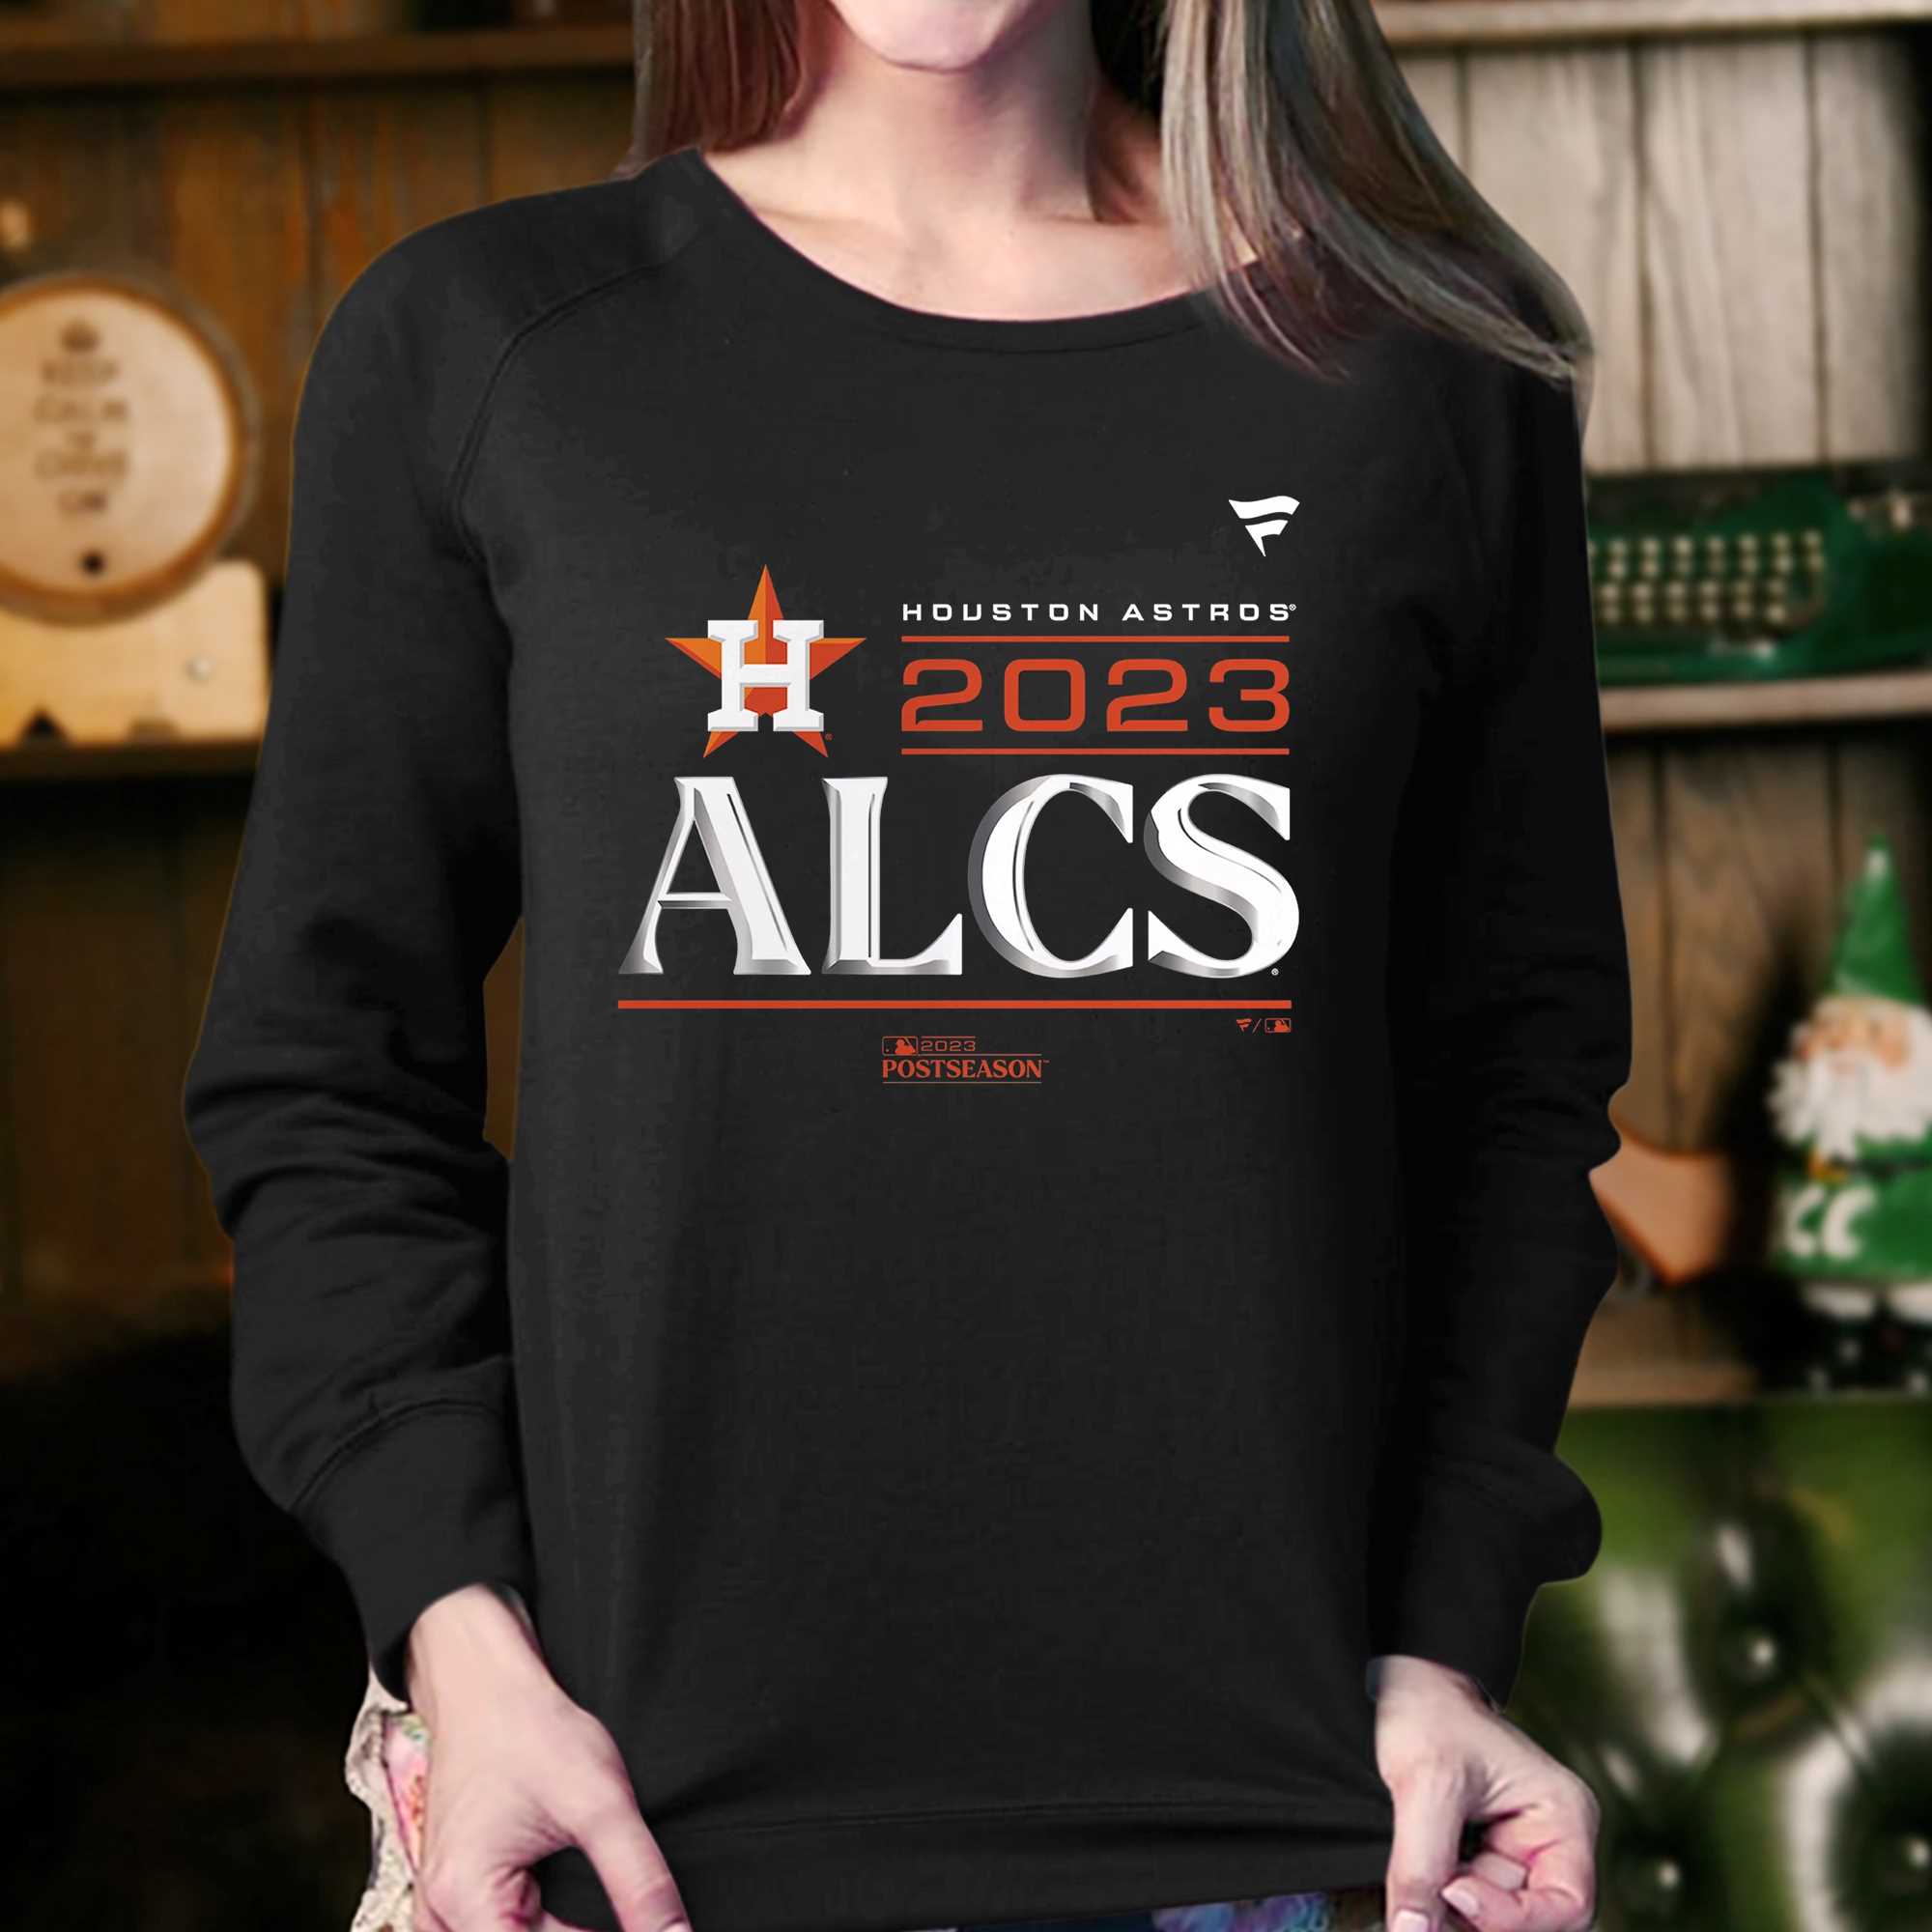 Houston Astros Take October 2023 Postseason T-shirt - Shibtee Clothing